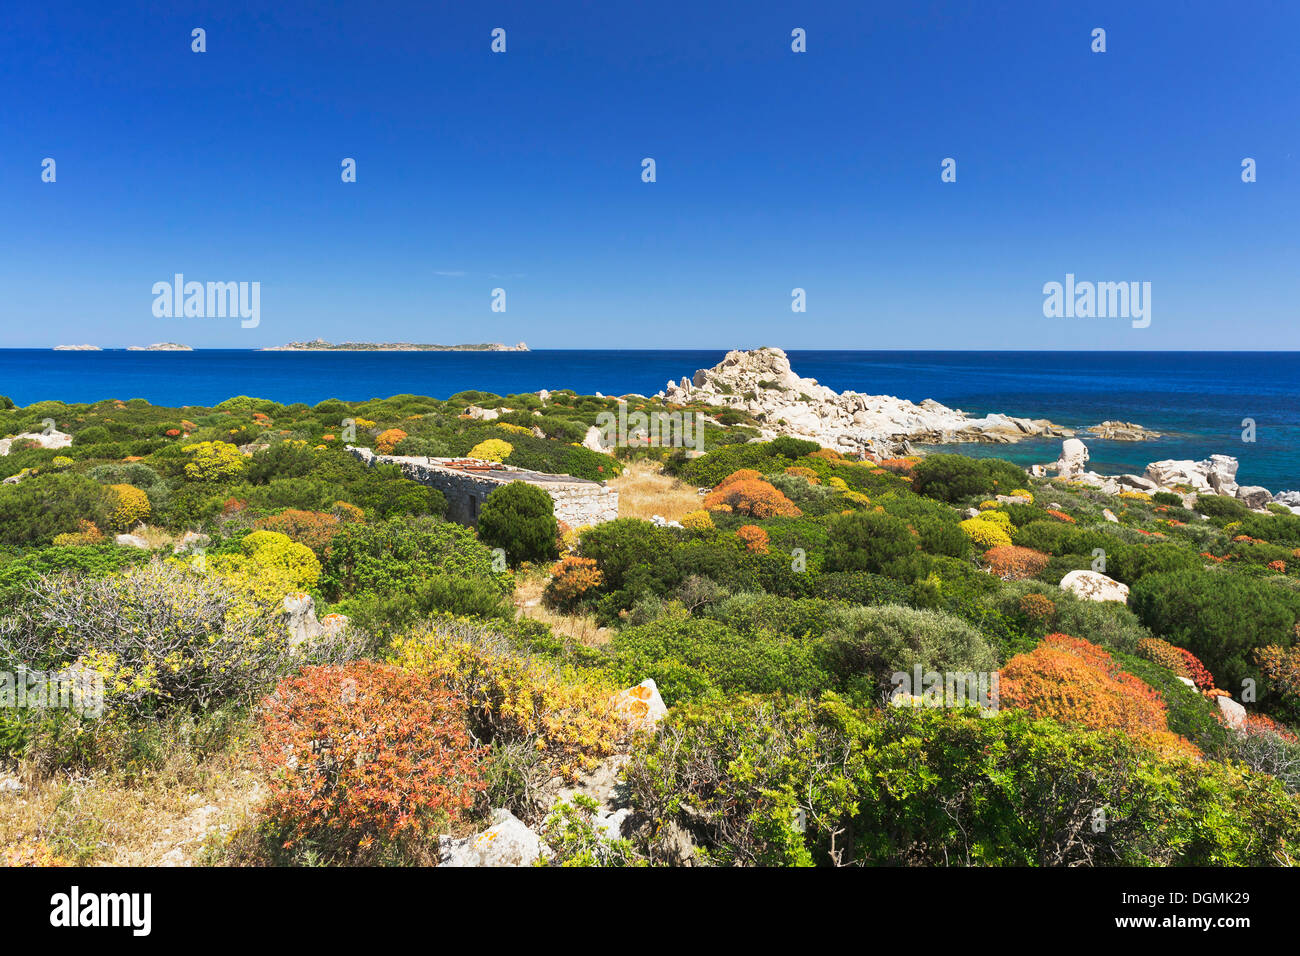 House and Macchia shrubland on the beach of Punta Molentis, Villasimius, Sarrabus, Cagliari province, Sardinia, Italy, Europe Stock Photo